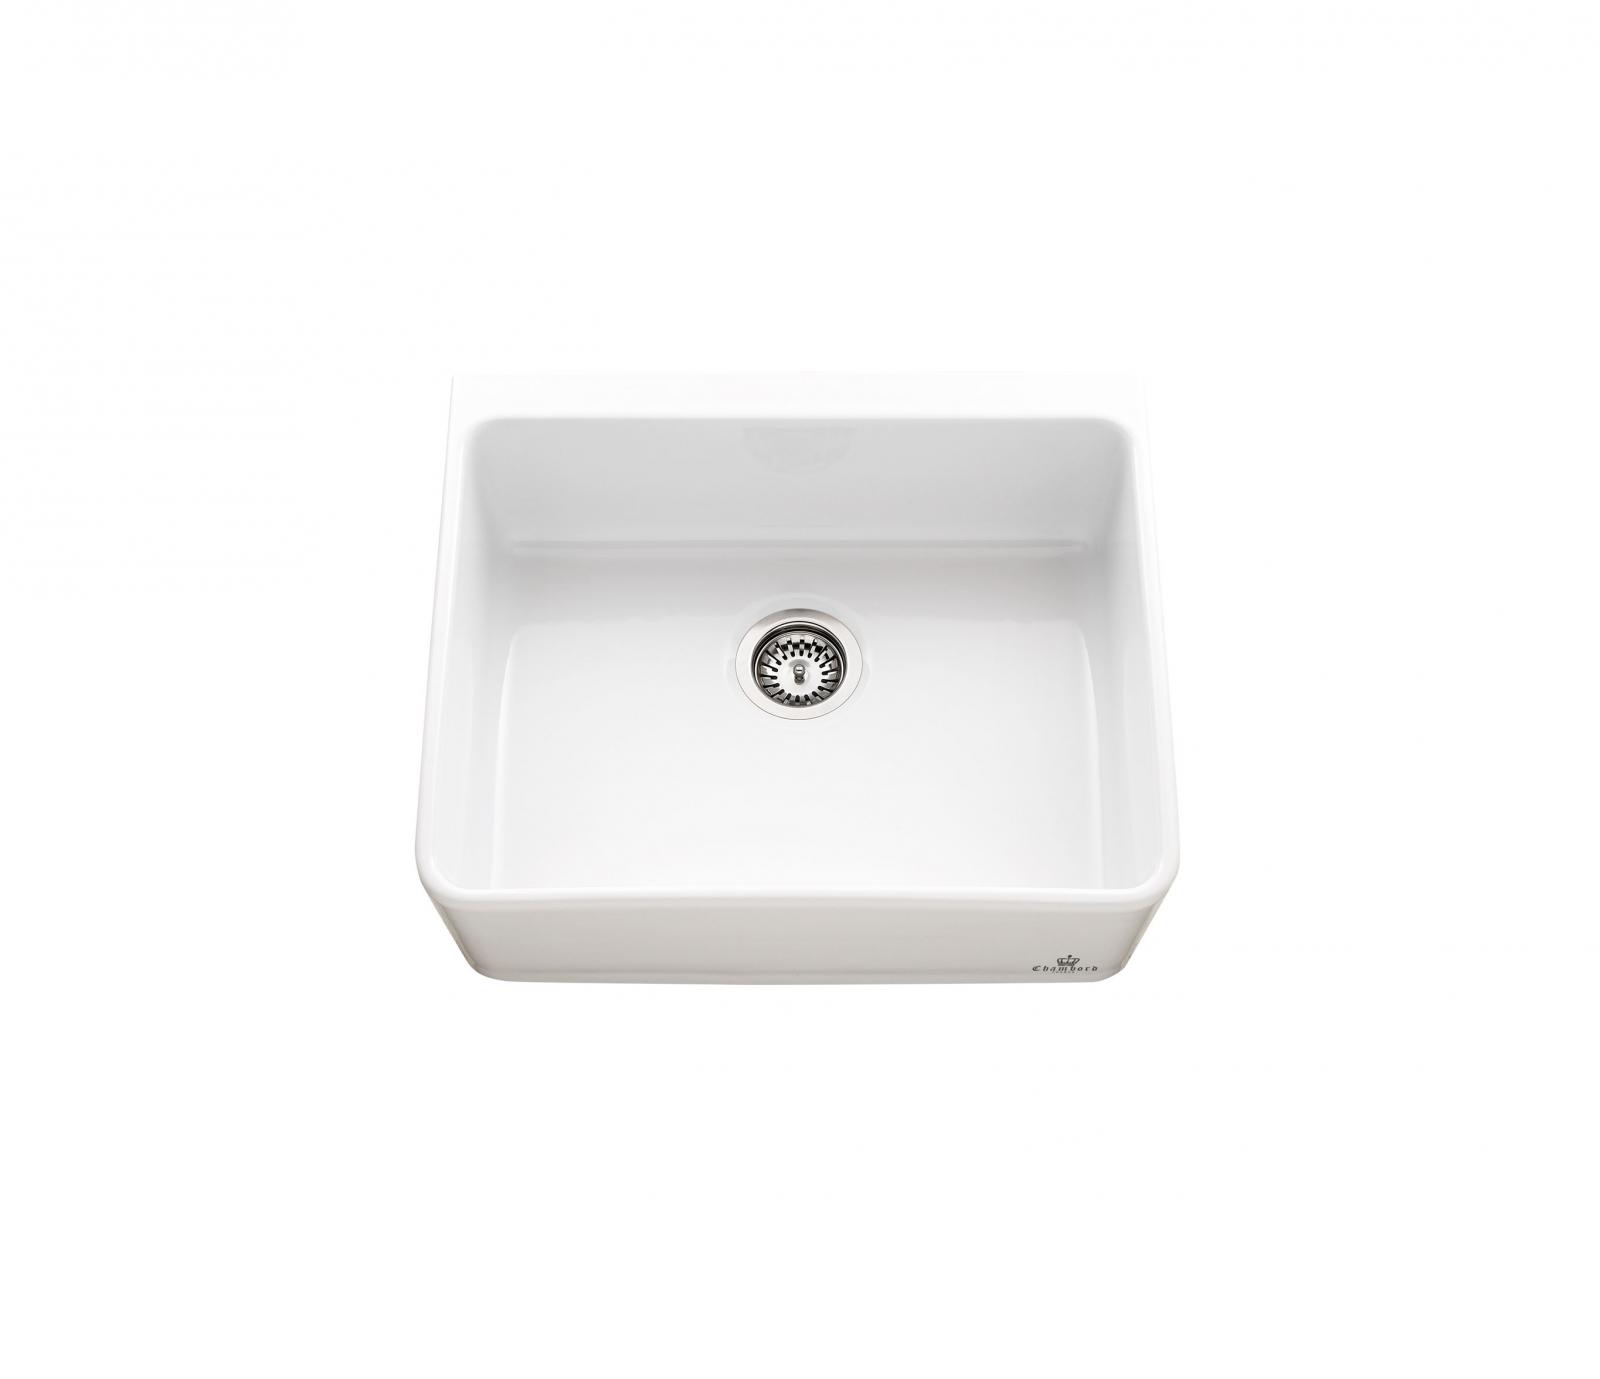 High-quality sink Clotaire I - single bowl, ceramic - ambience 2